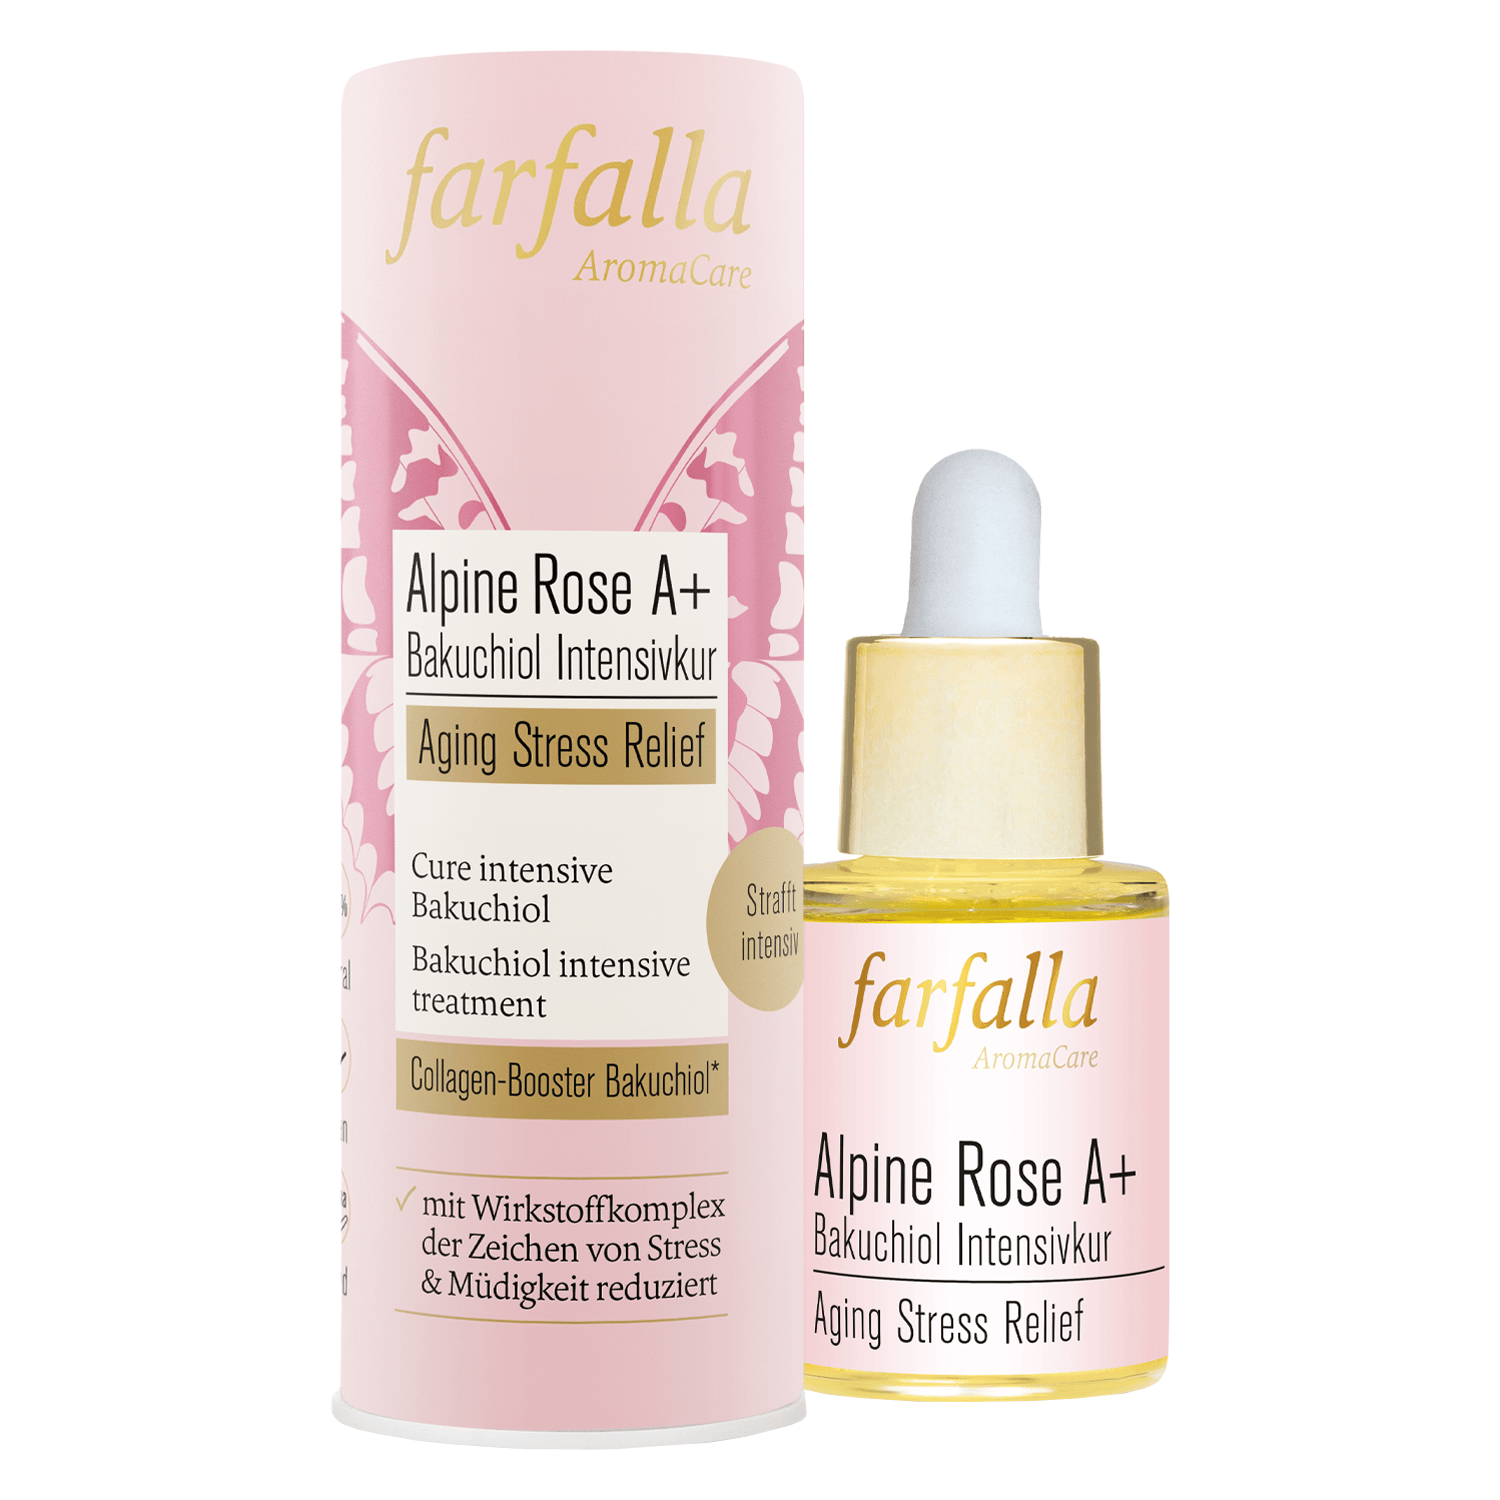 Product image from Farfalla Care - Alpine Rose A+ Bakuchiol Intensivkur